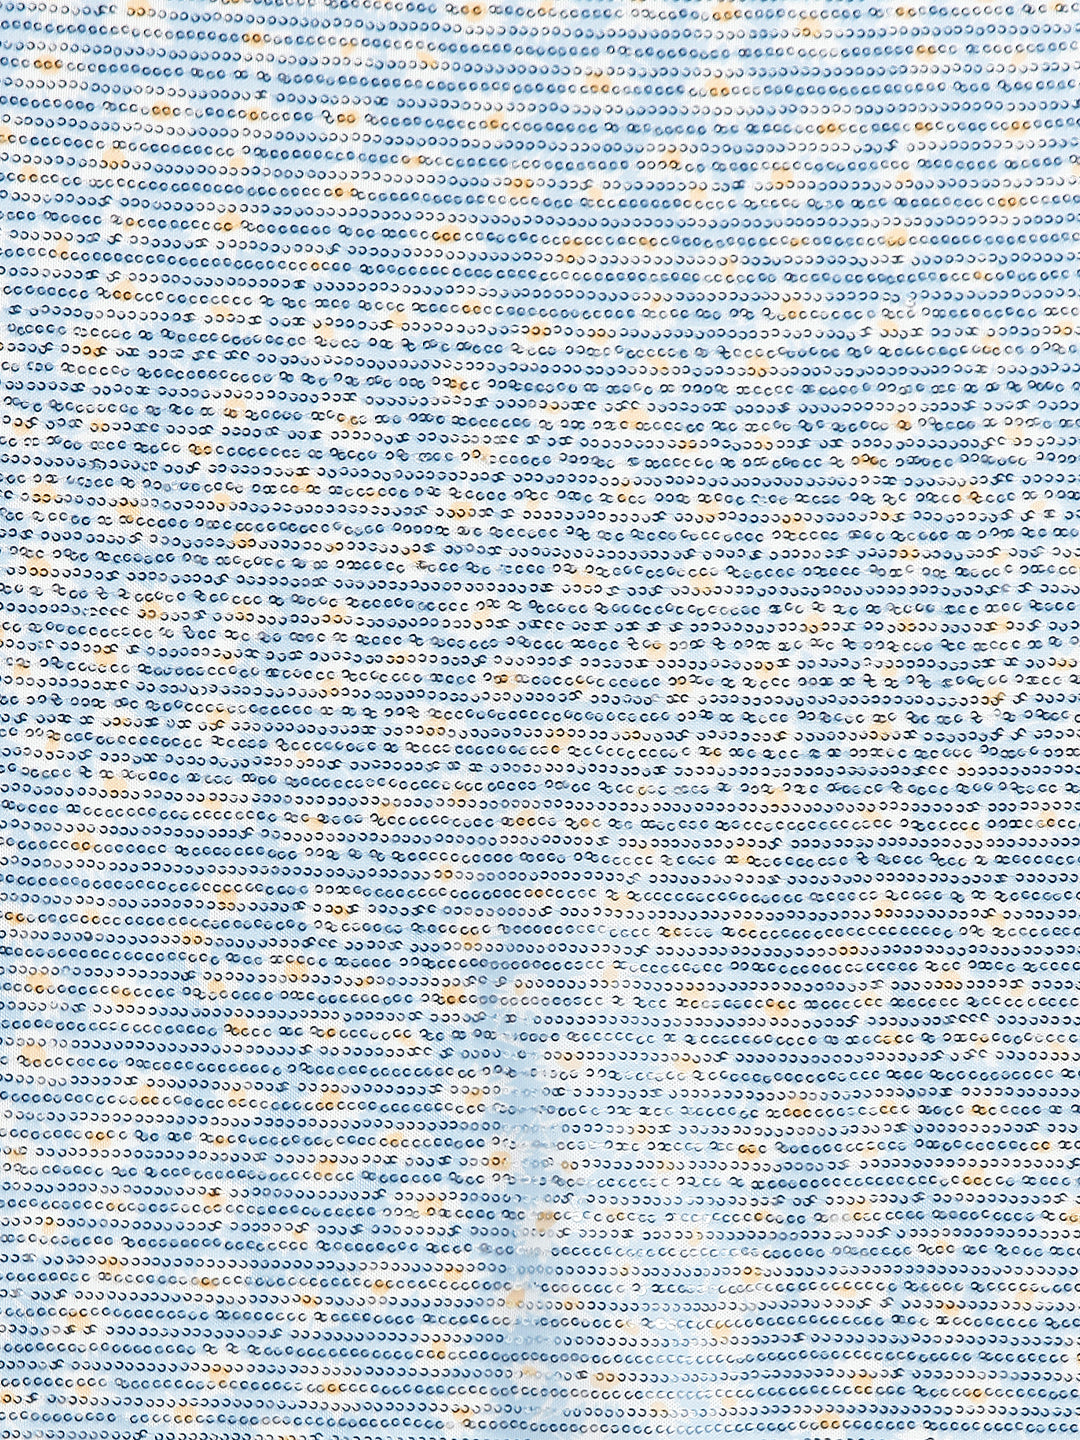 Blue Floral Print Net Sequin Saree